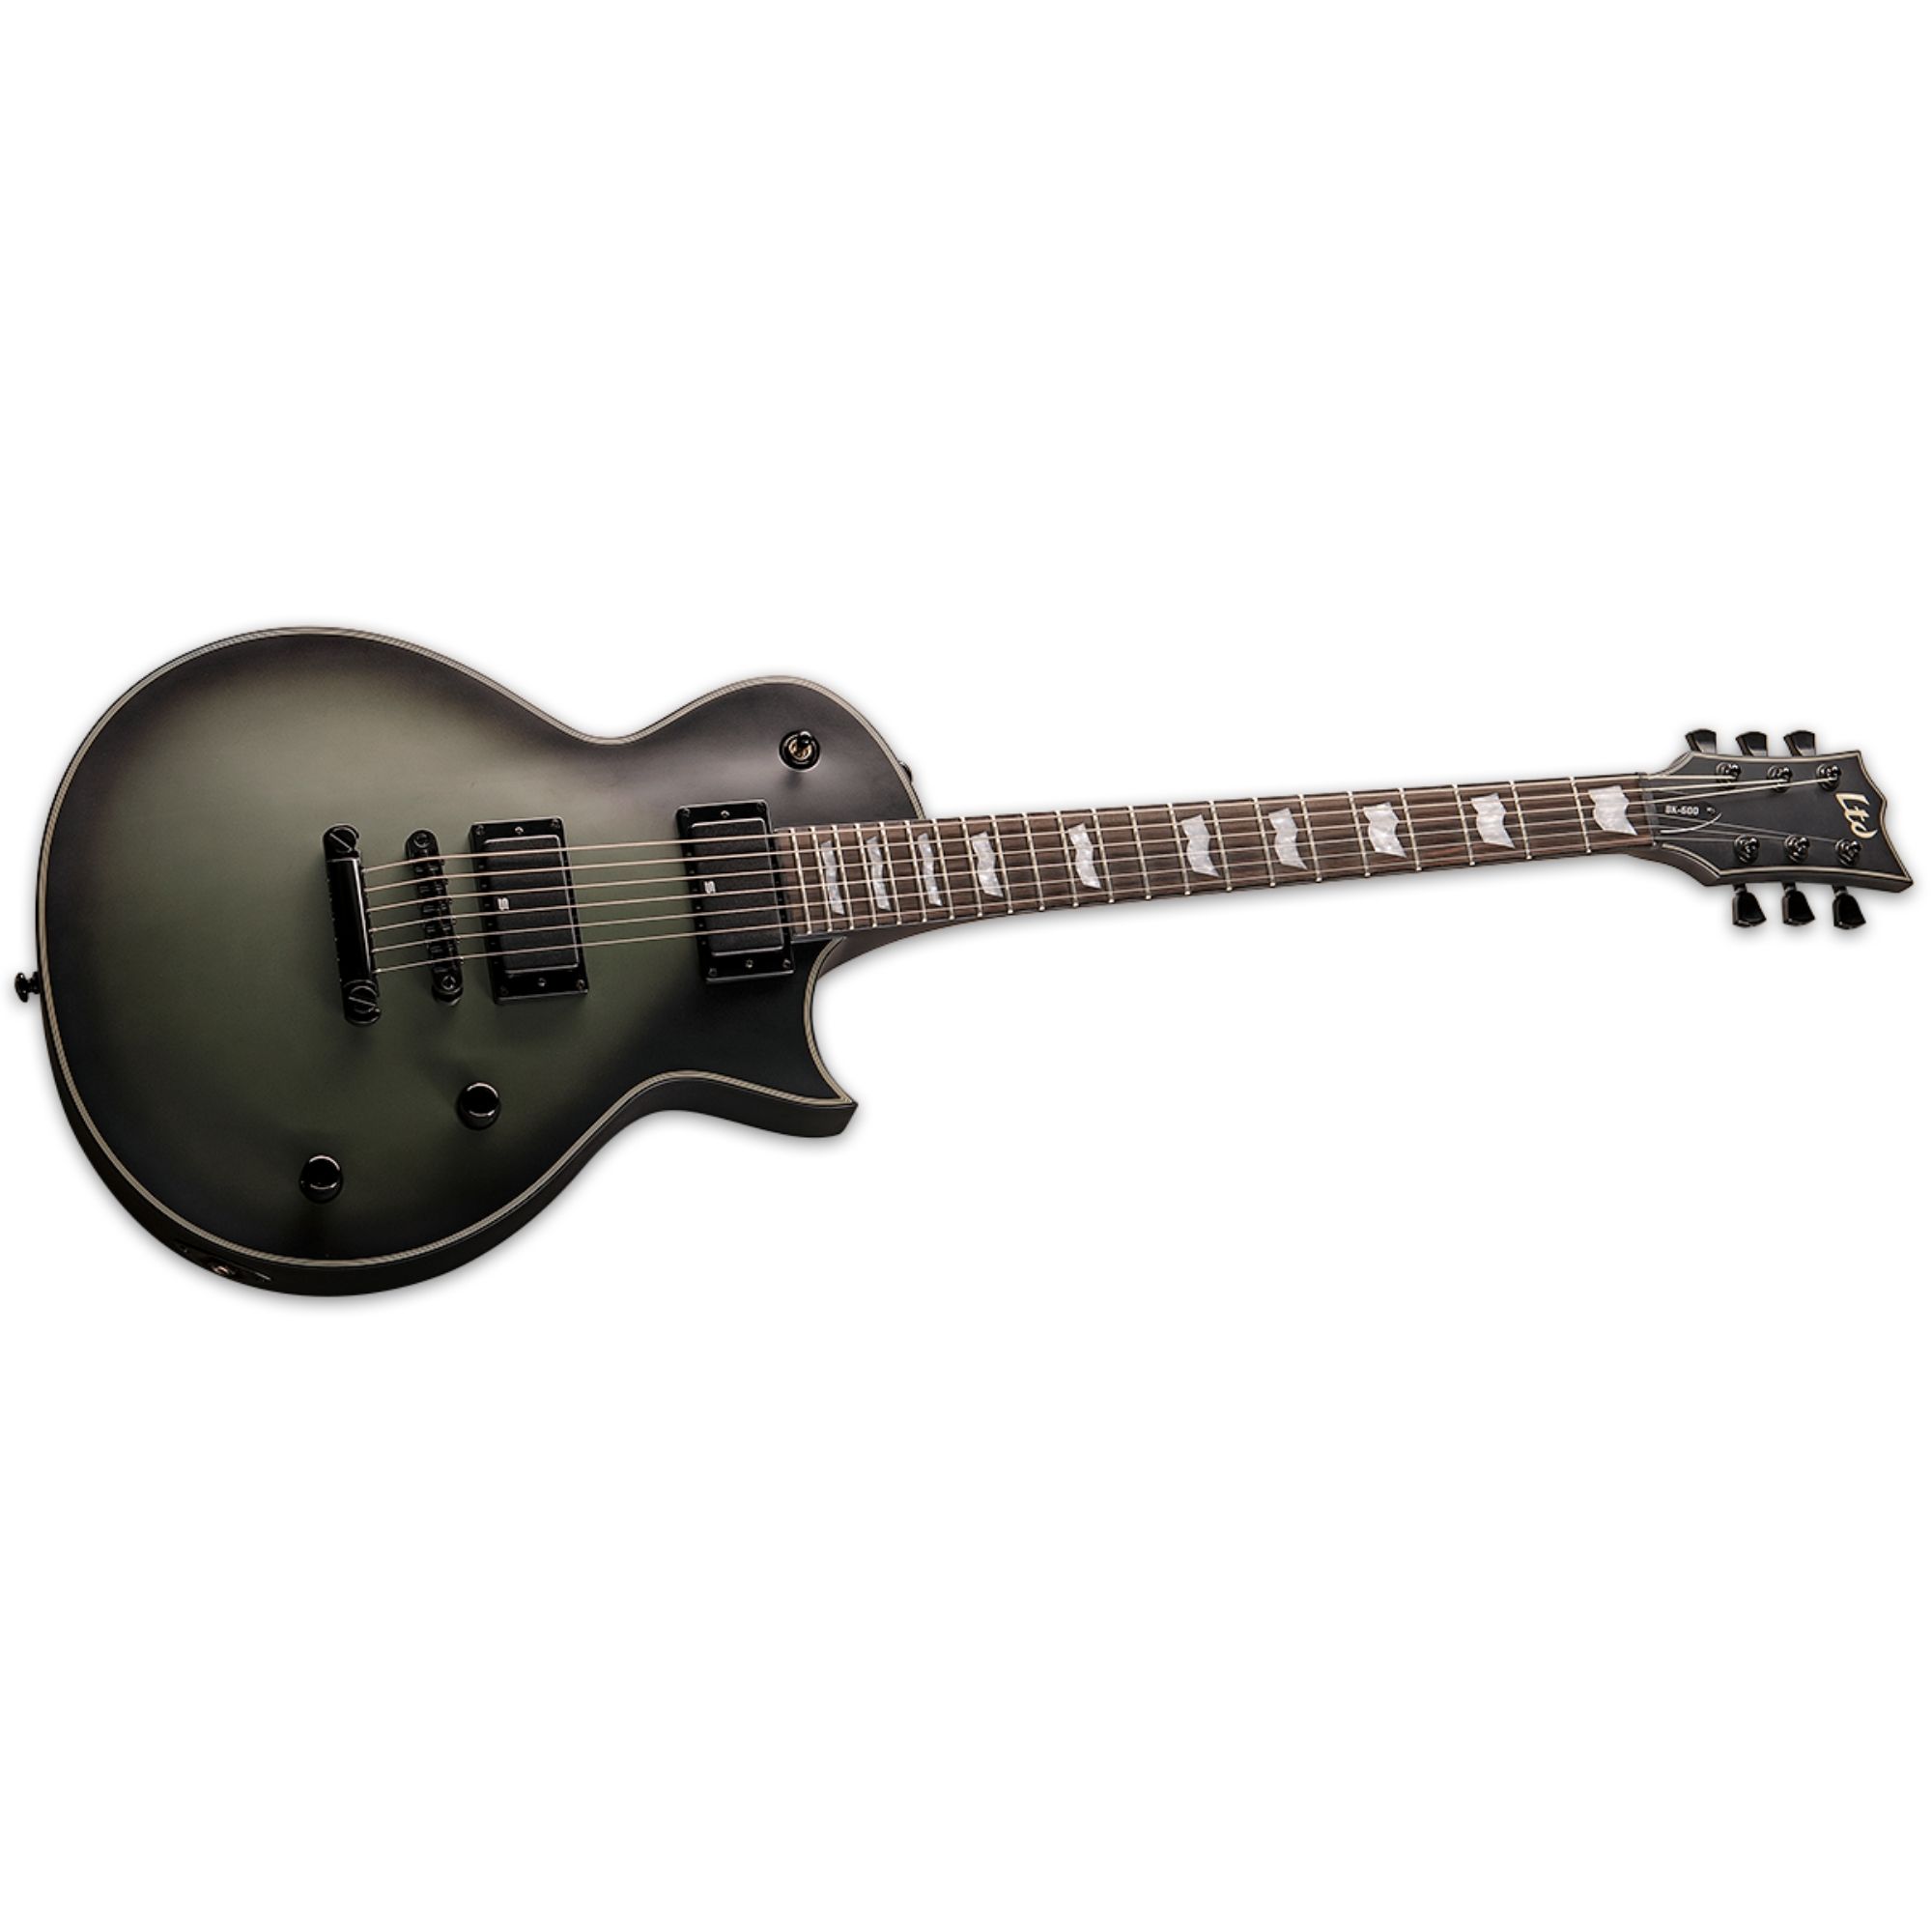 Buy ESP BK600 electric guitar online in India